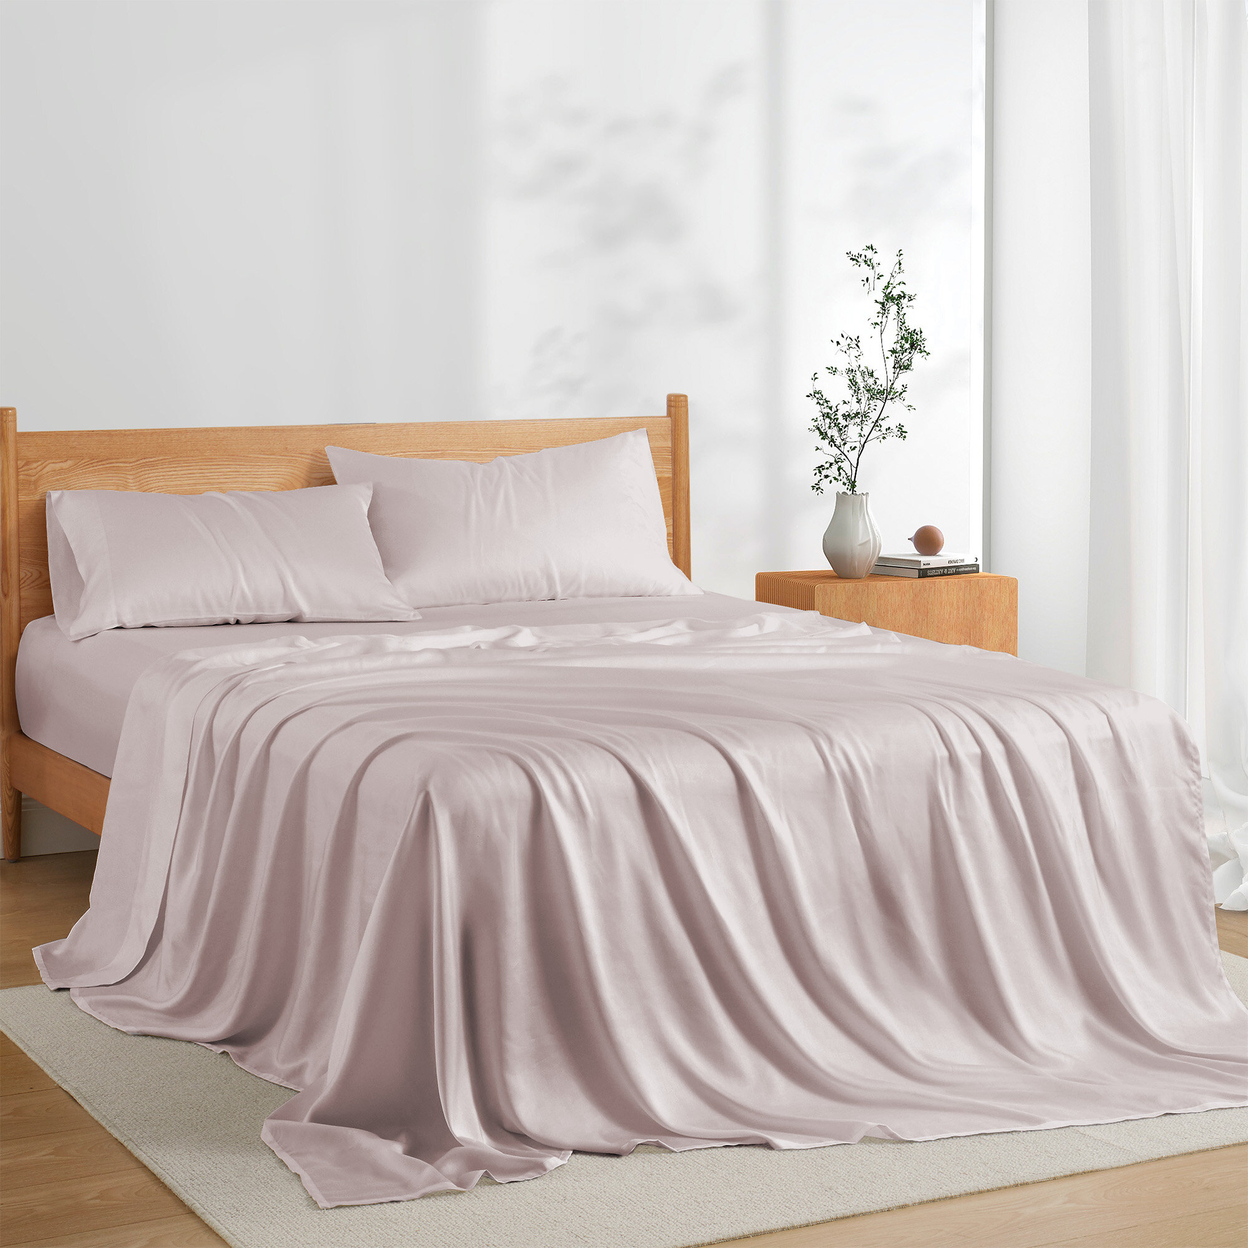 Silky Soft TENCELâ¢ Lyocell Cooling Sheet Set-Breathability And Moisture-wicking Bedding Set - Primrose Pink, King